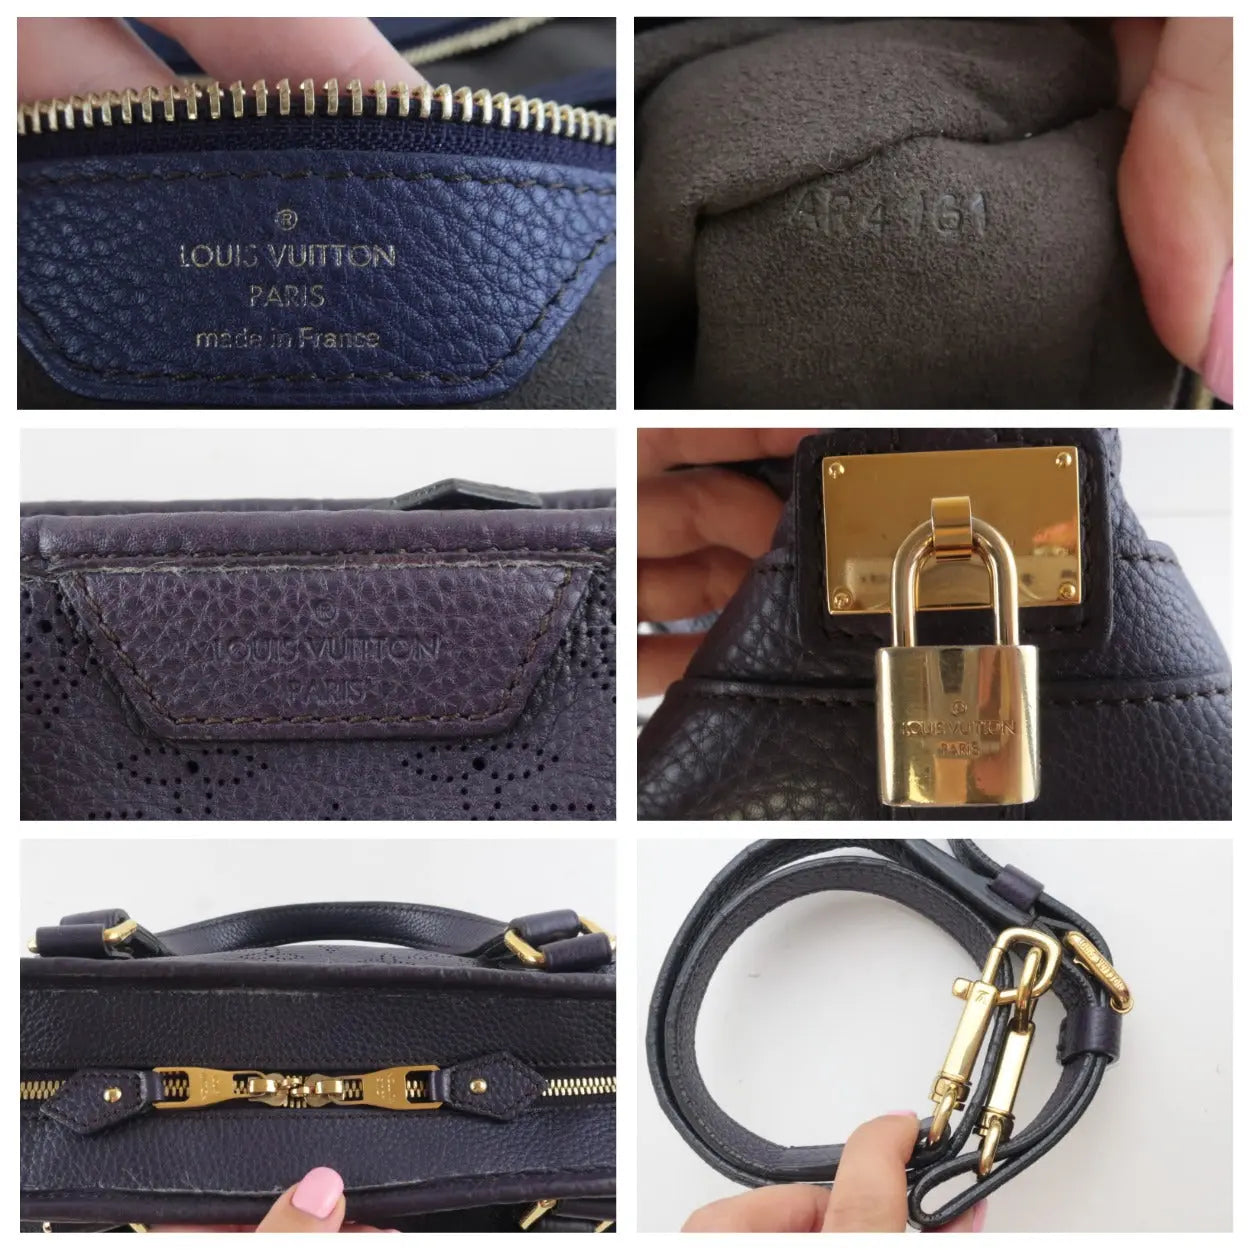 Louis Vuitton Poudre Mahina Leather Stellar PM Bag